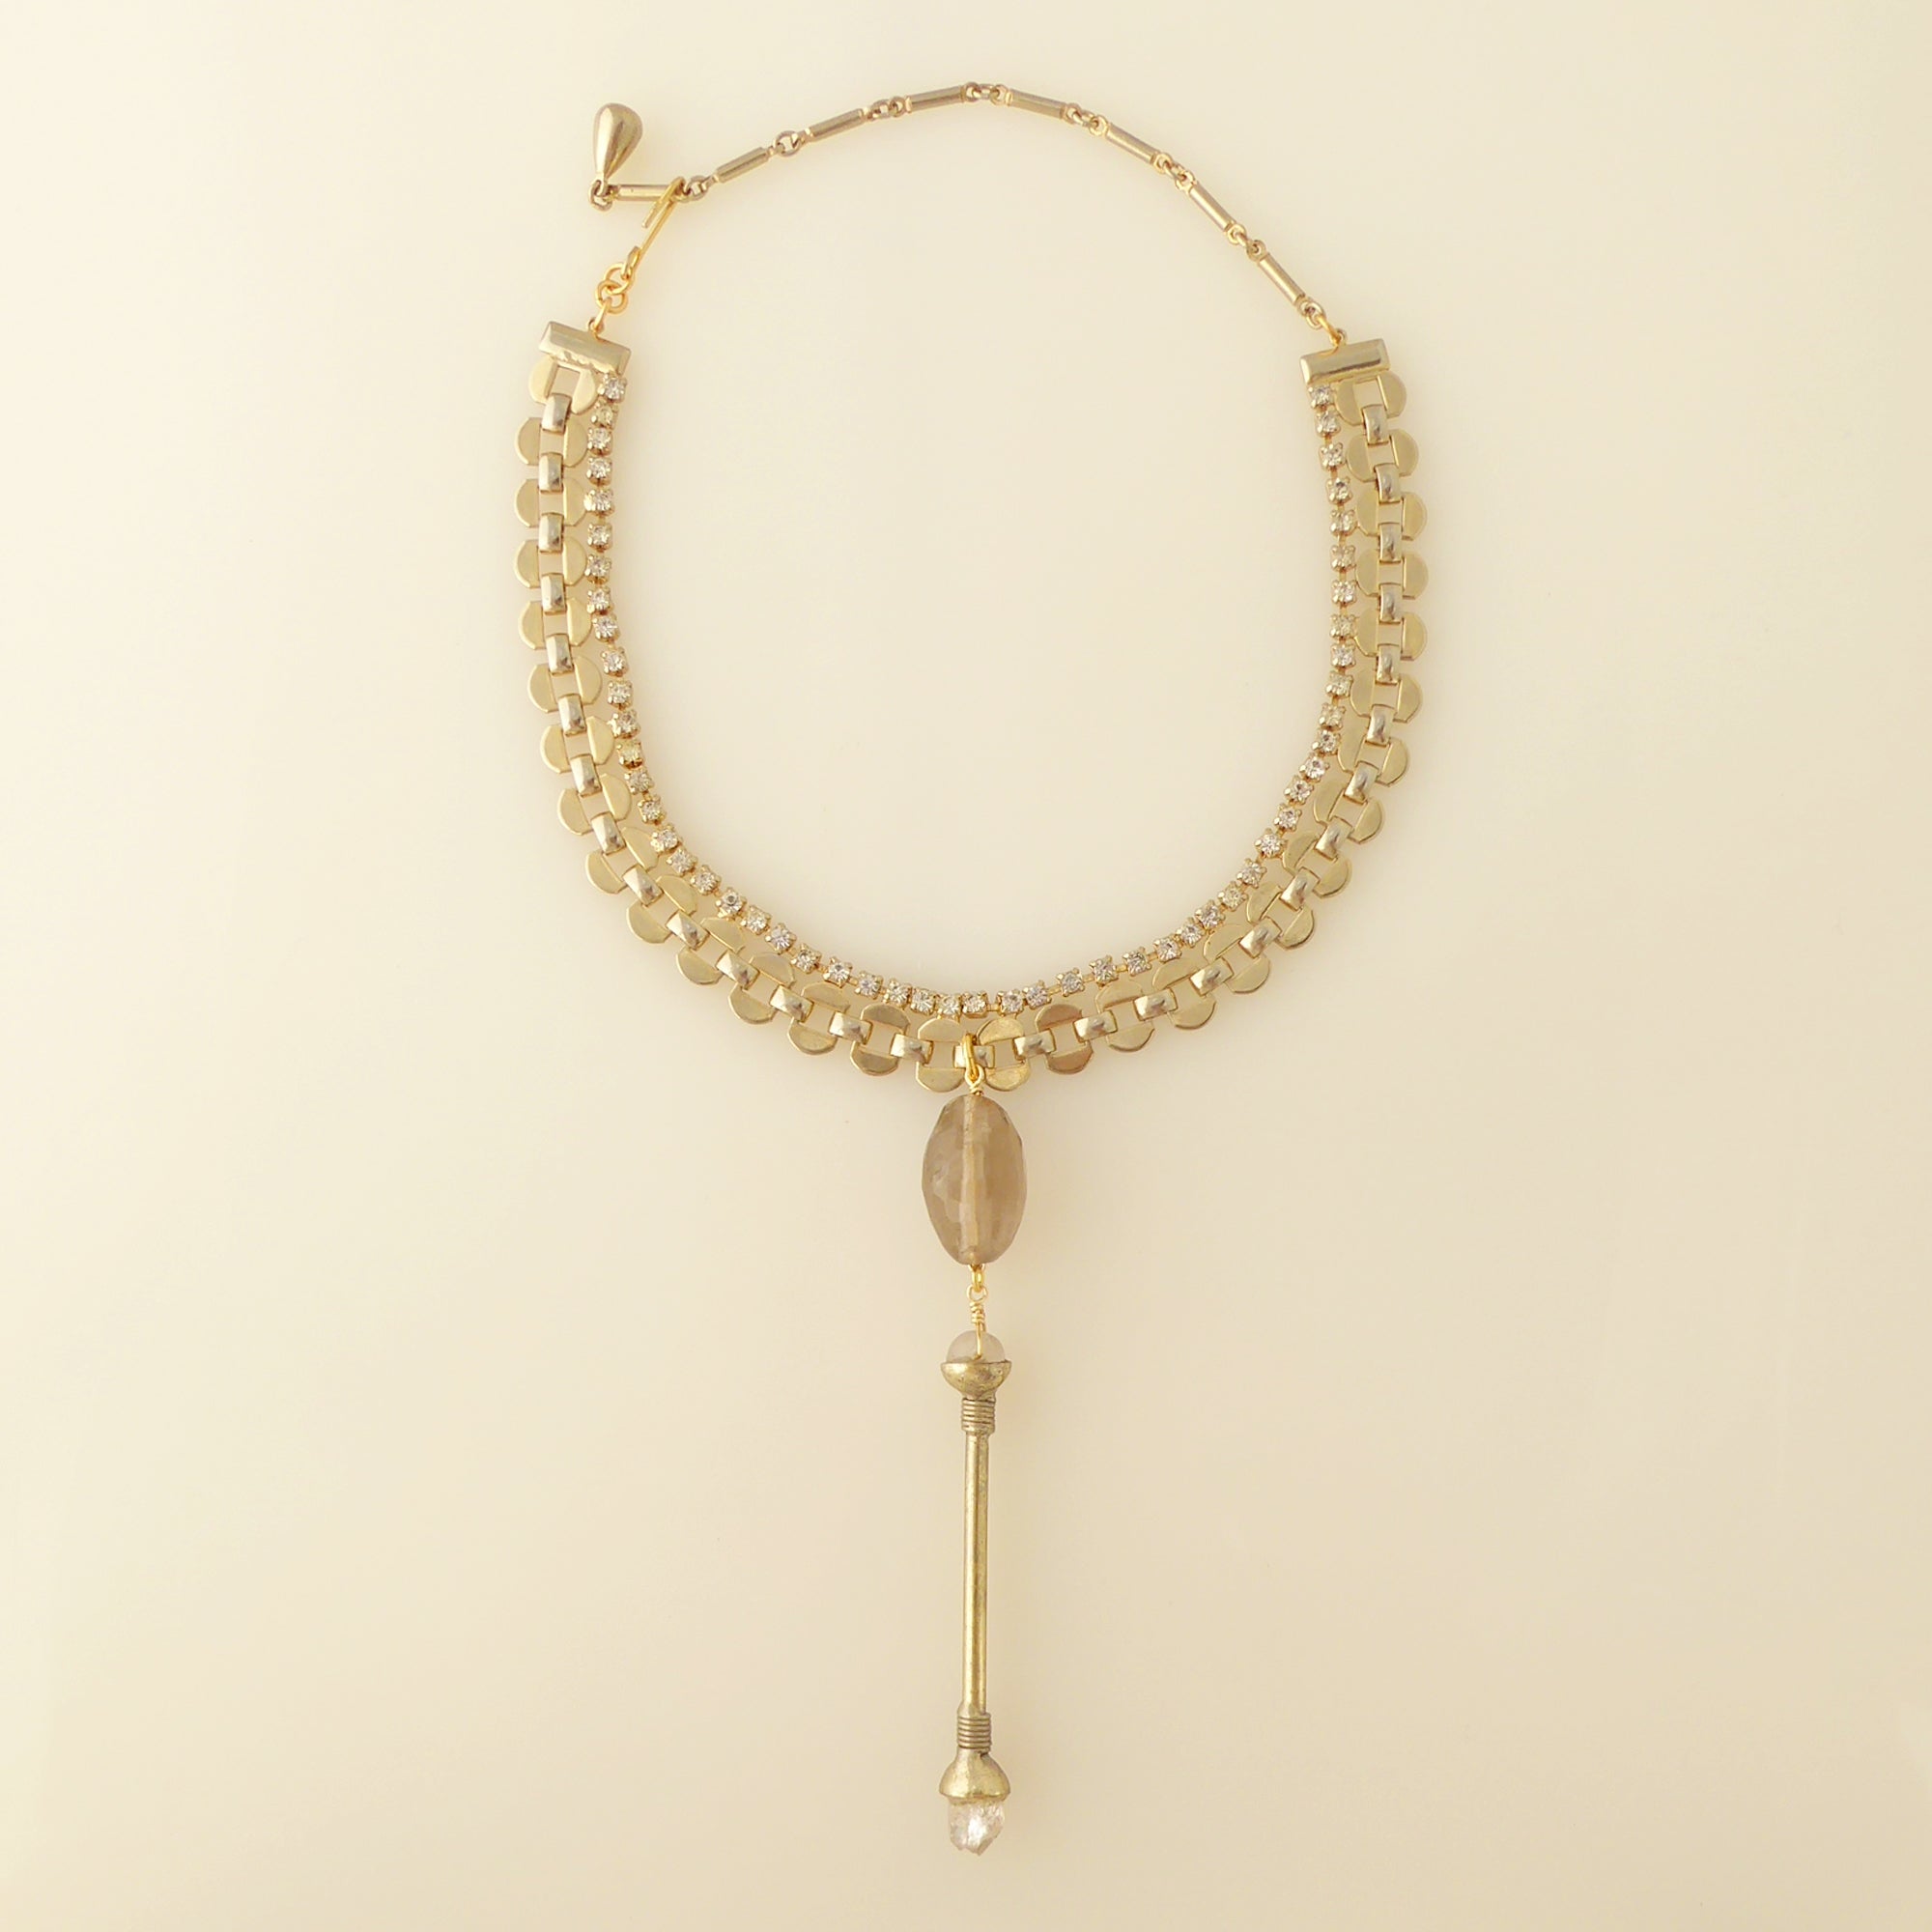 Crystal wand choker necklace by Jenny Dayco 5